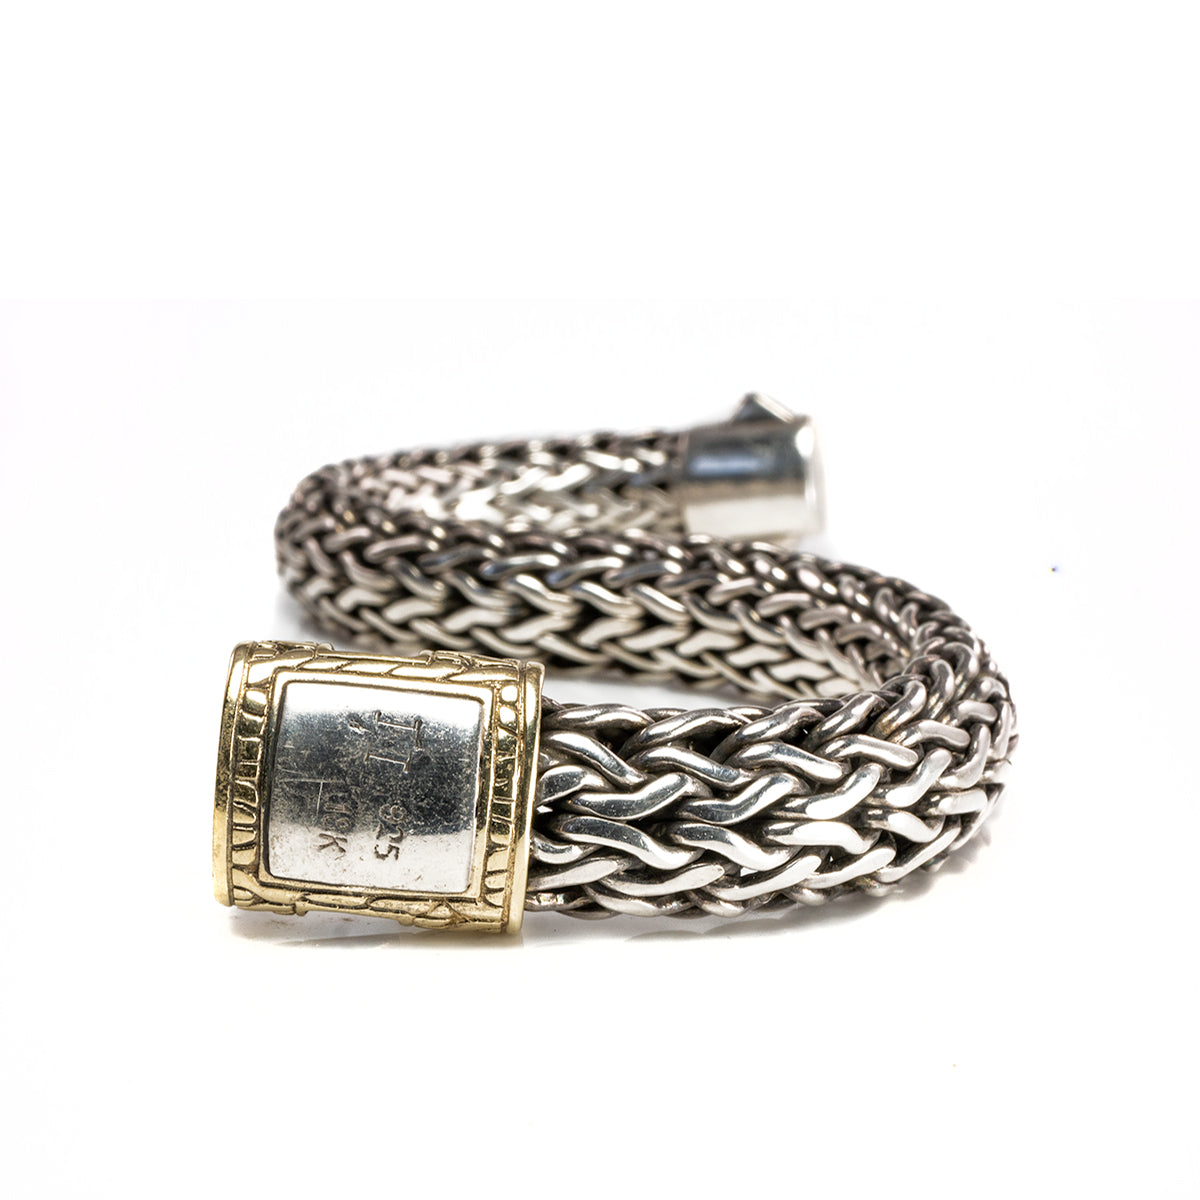 John Hardy Men's Silver and Gold Chain Bracelet